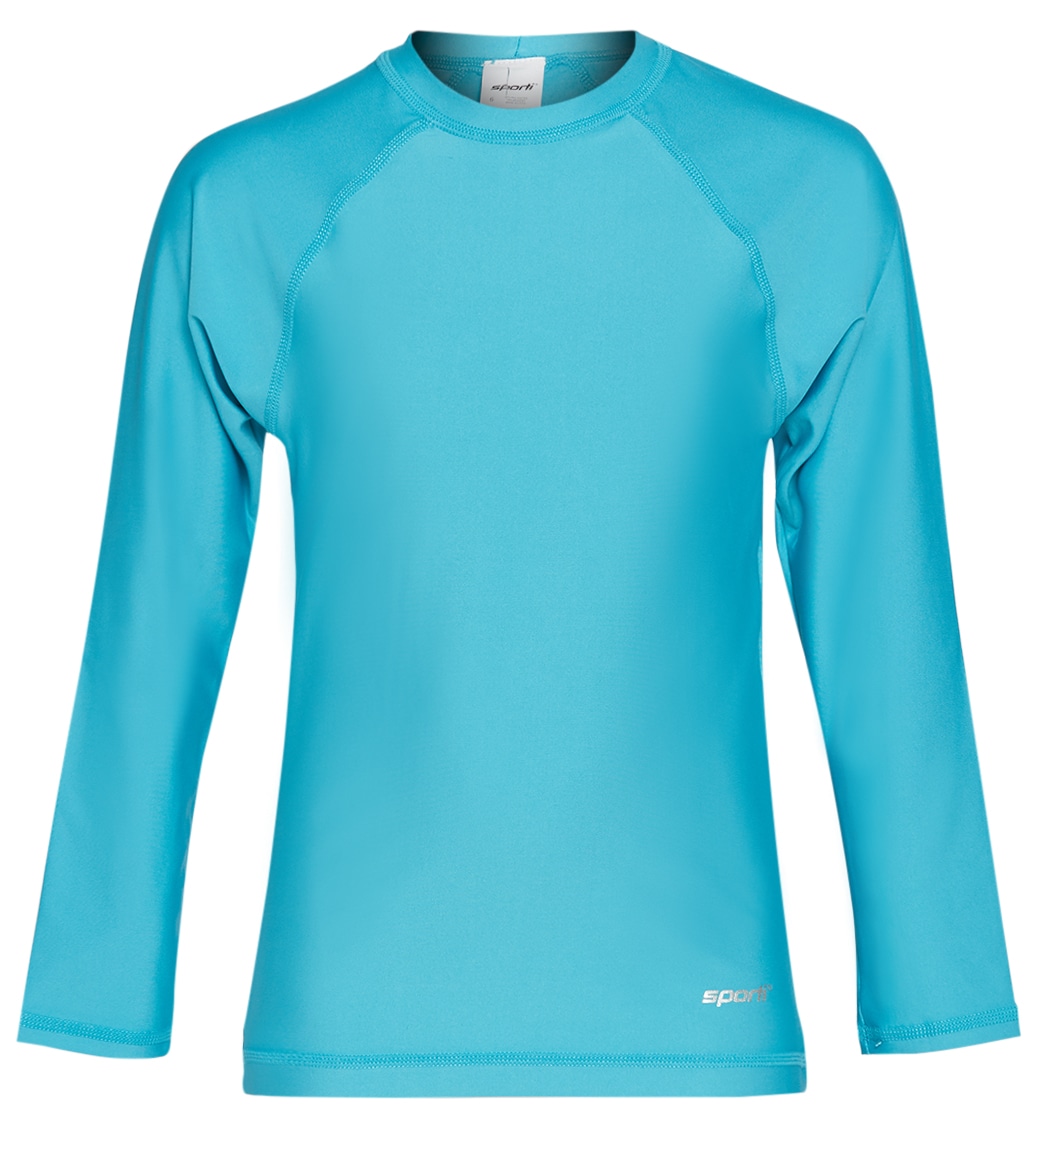 Sporti Youth Men's Long Sleeve Shirt Upf 50+ Comfort Fit Rashguard - Ocean Blue 10 - Swimoutlet.com